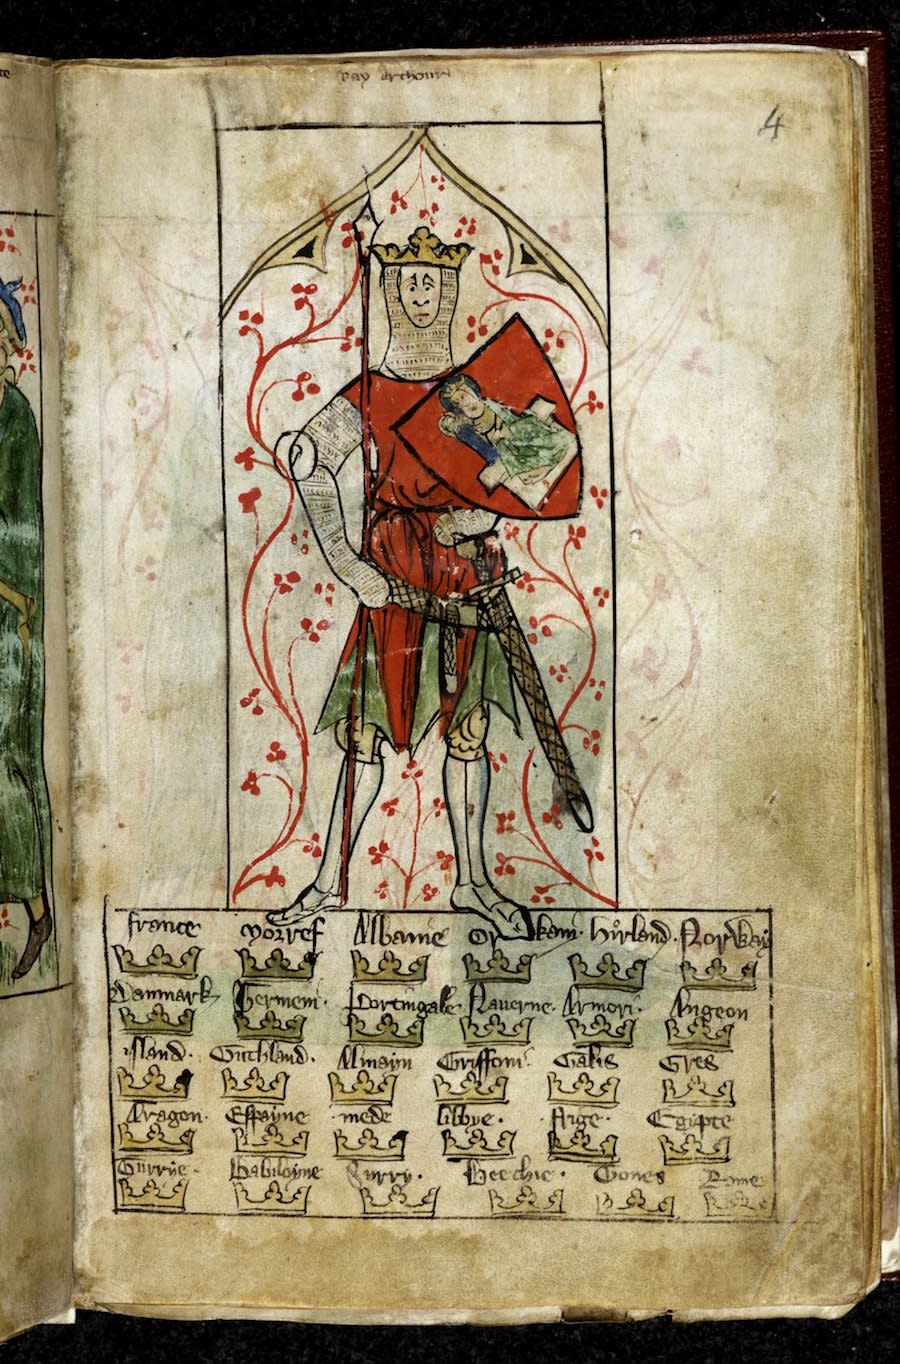 A miniature of King Arthur